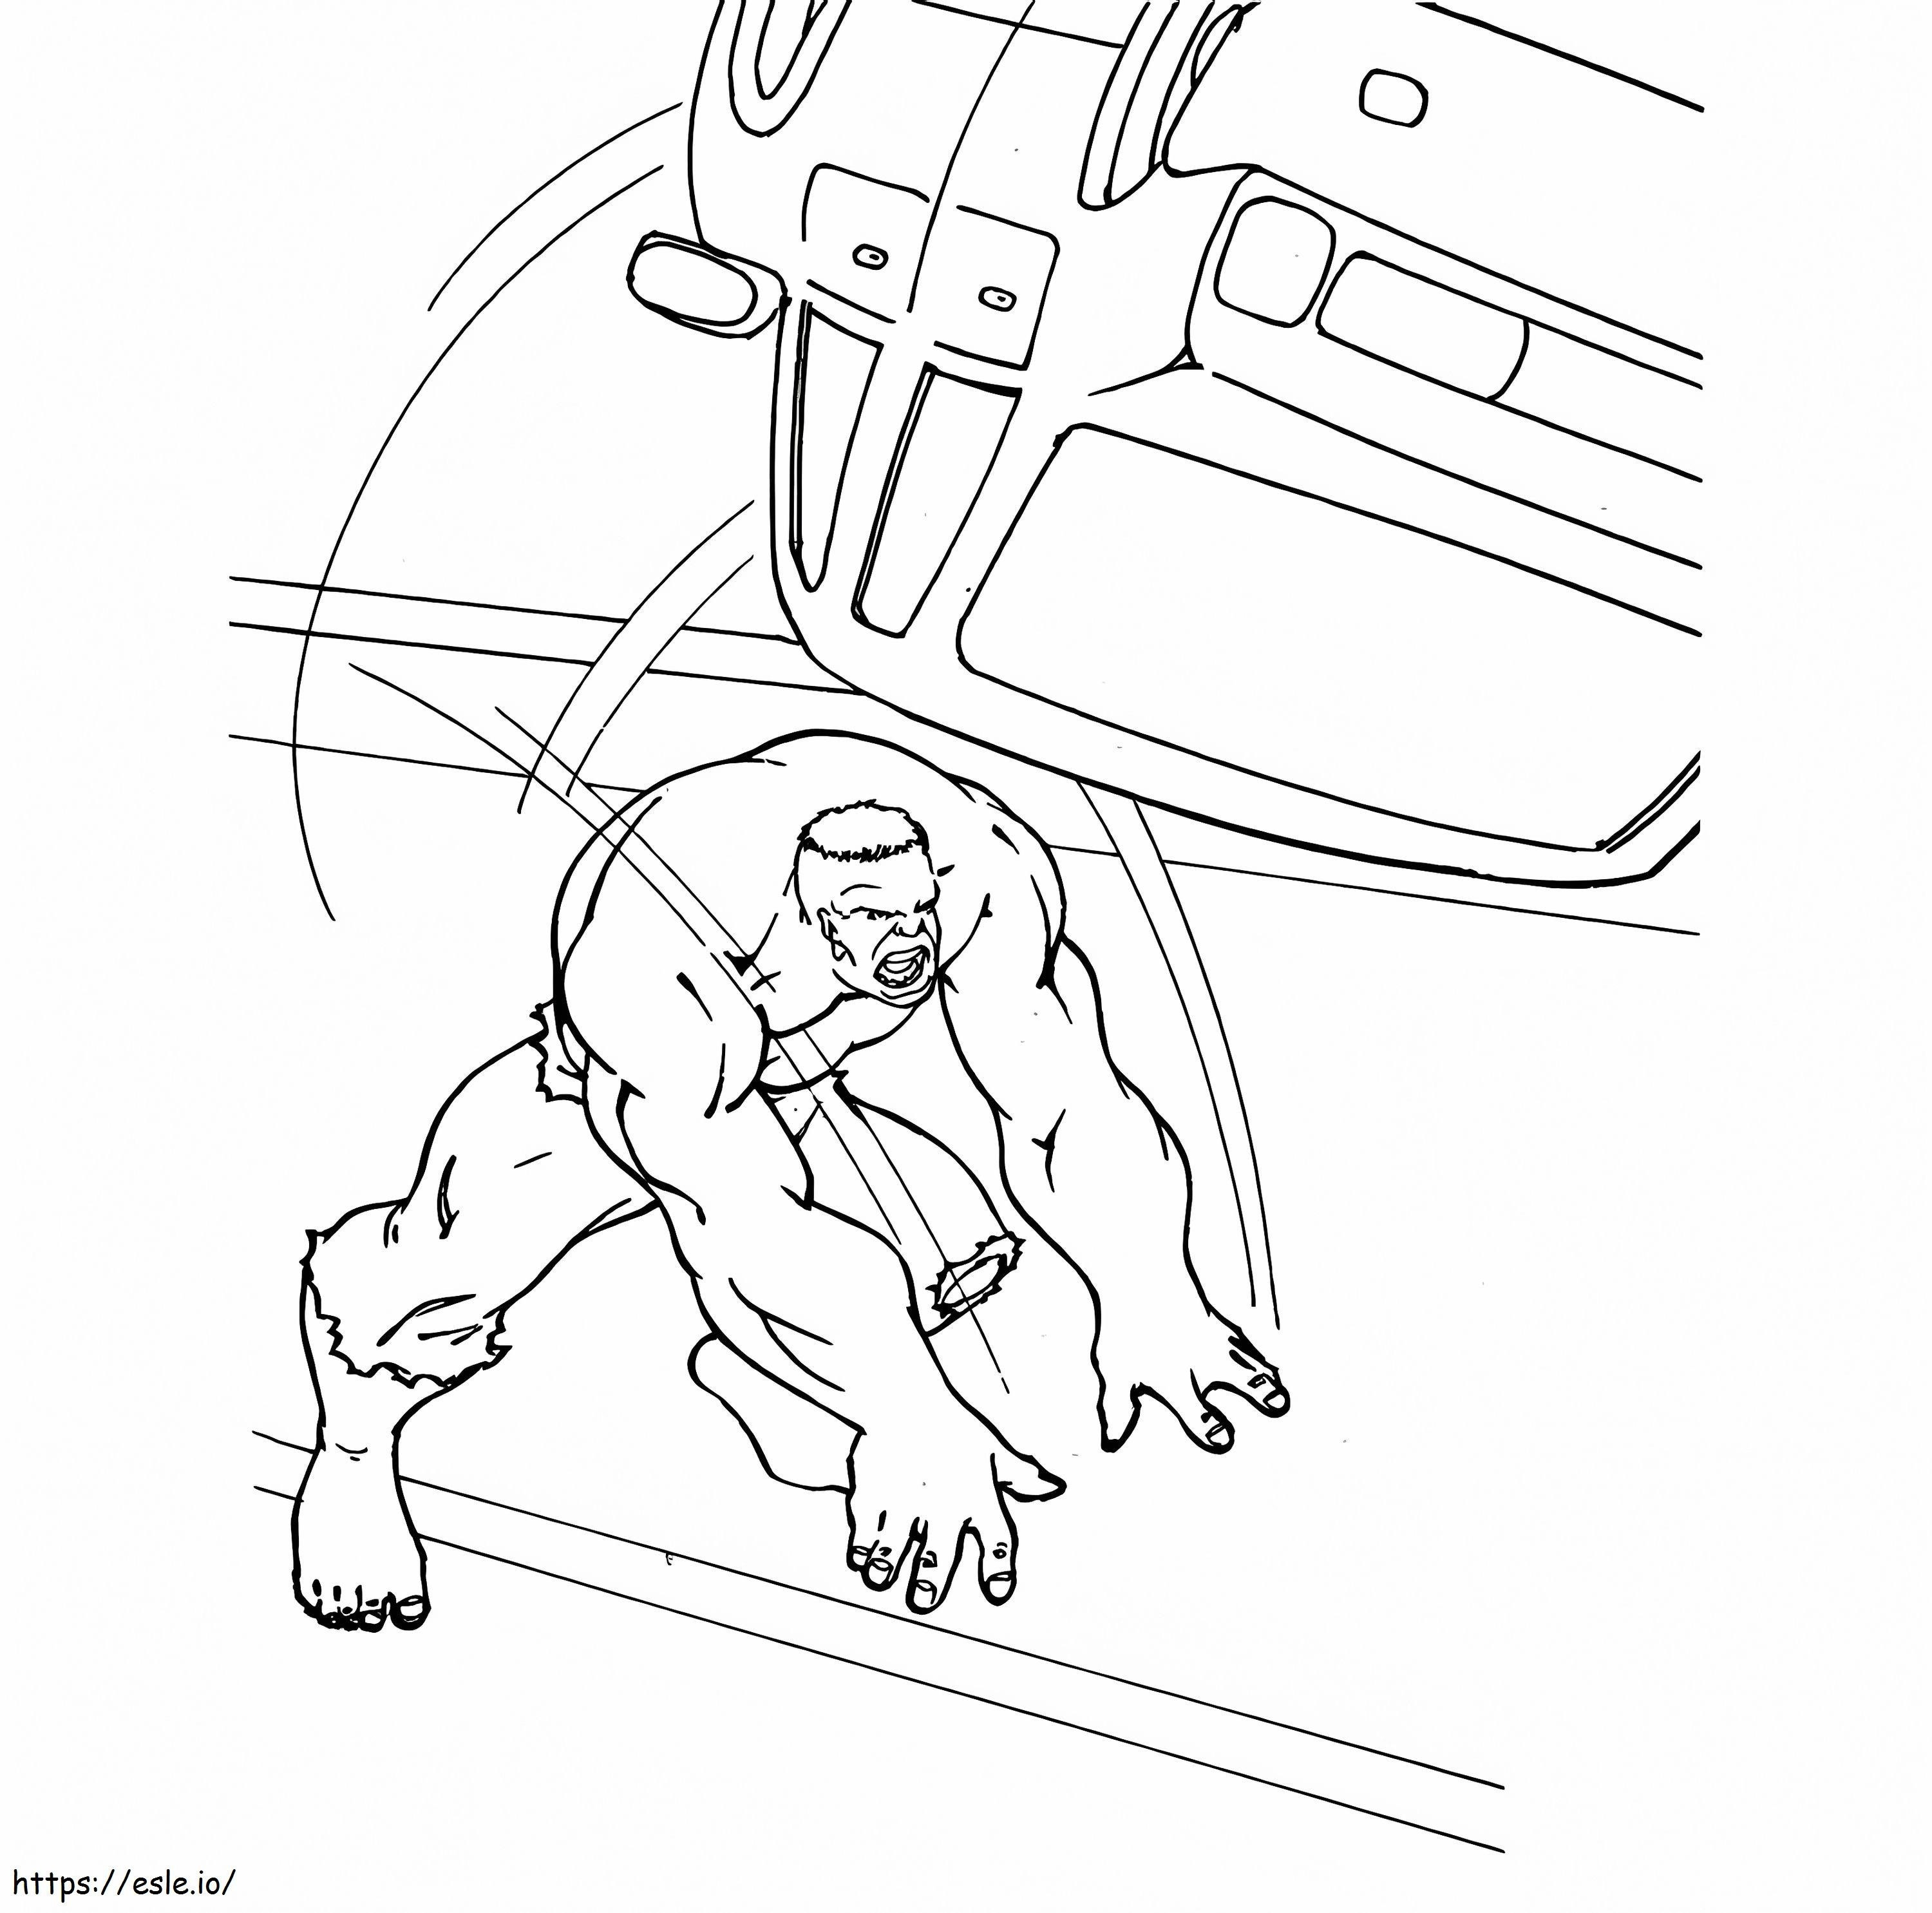 1562292504_Hulk jogando carro A4 para colorir